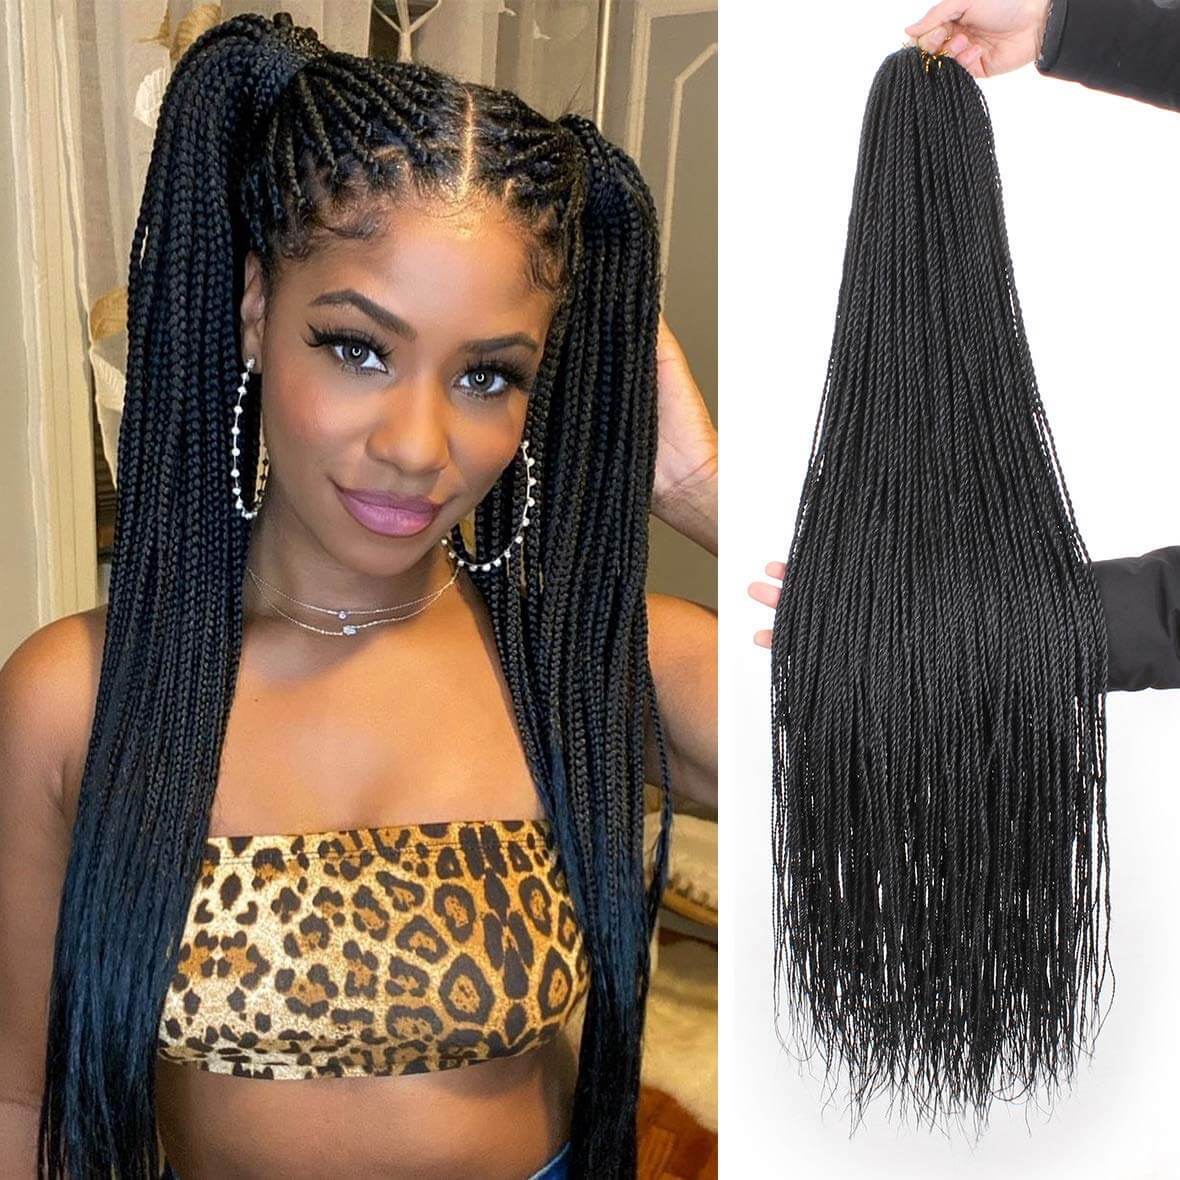 SEGO Crochet Braids Senegalese Twist Crochet Hair Pre Looped Mini Twist  Crotchet Hair Synthetic Braiding Hair For Women